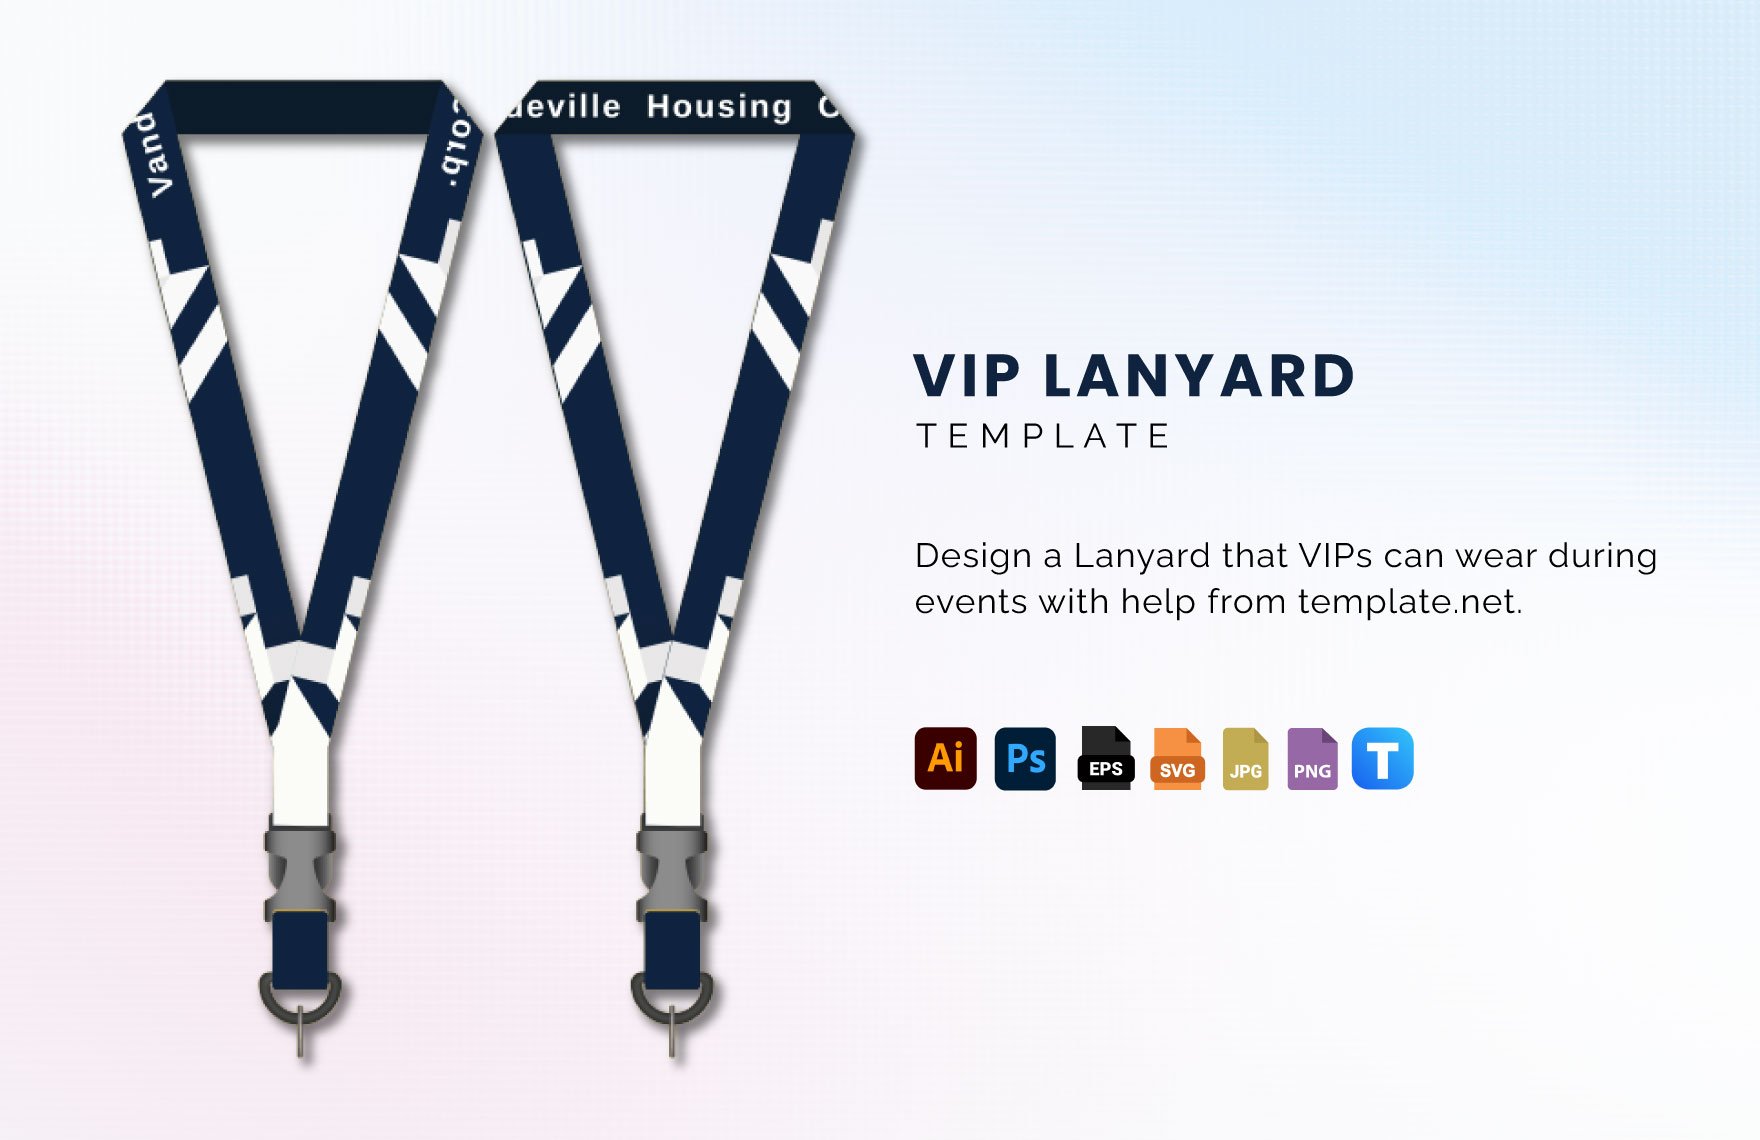 VIP Lanyard Template